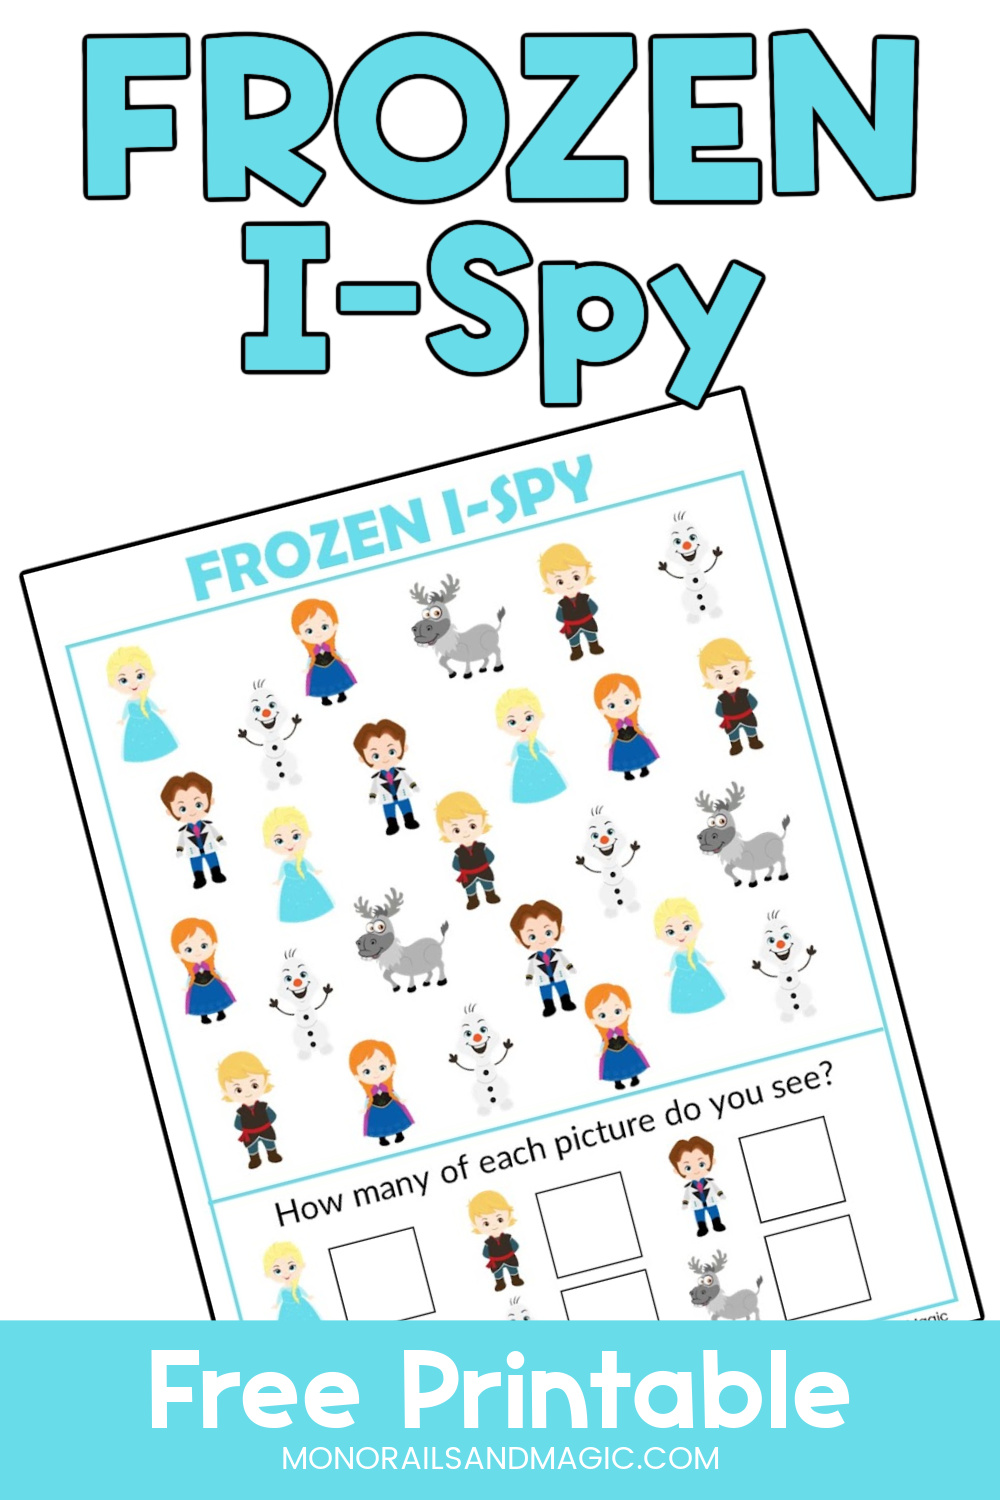 Free printable Frozen I-Spy activity for kids.